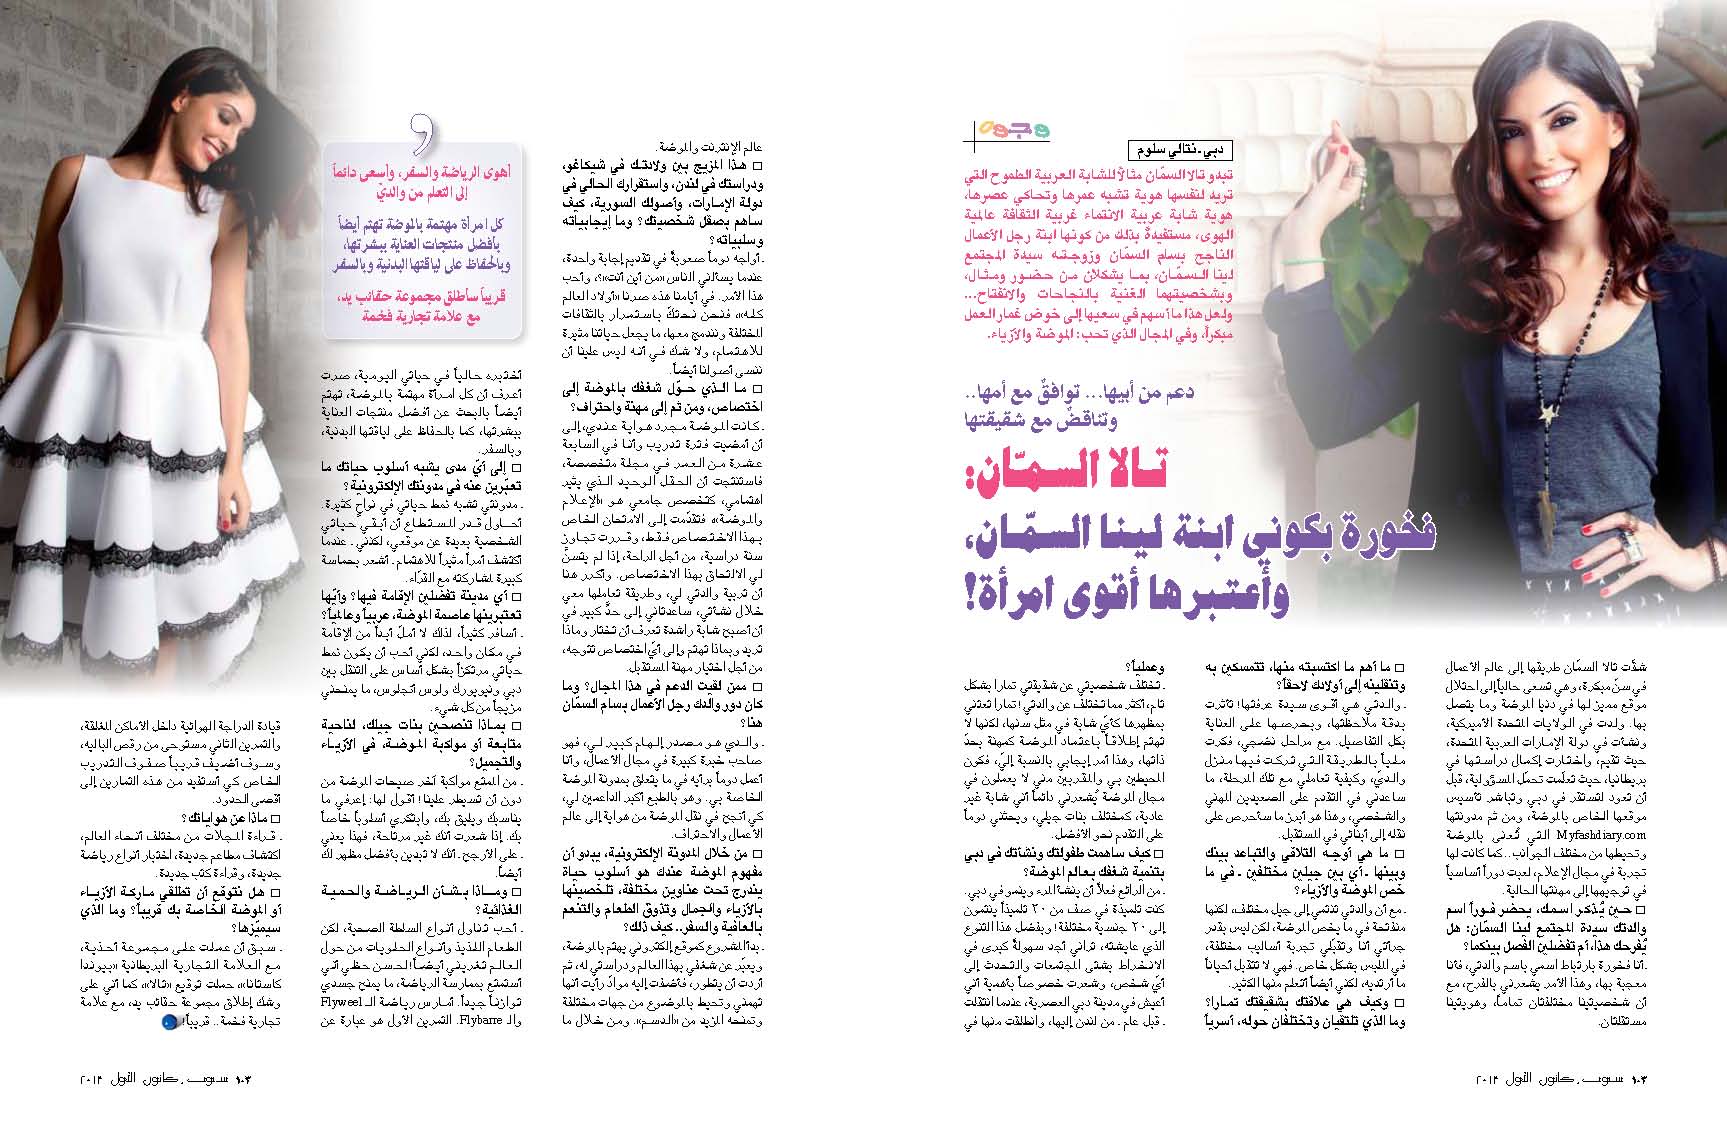 Featured in top Arabic title, SNOB Magazine.